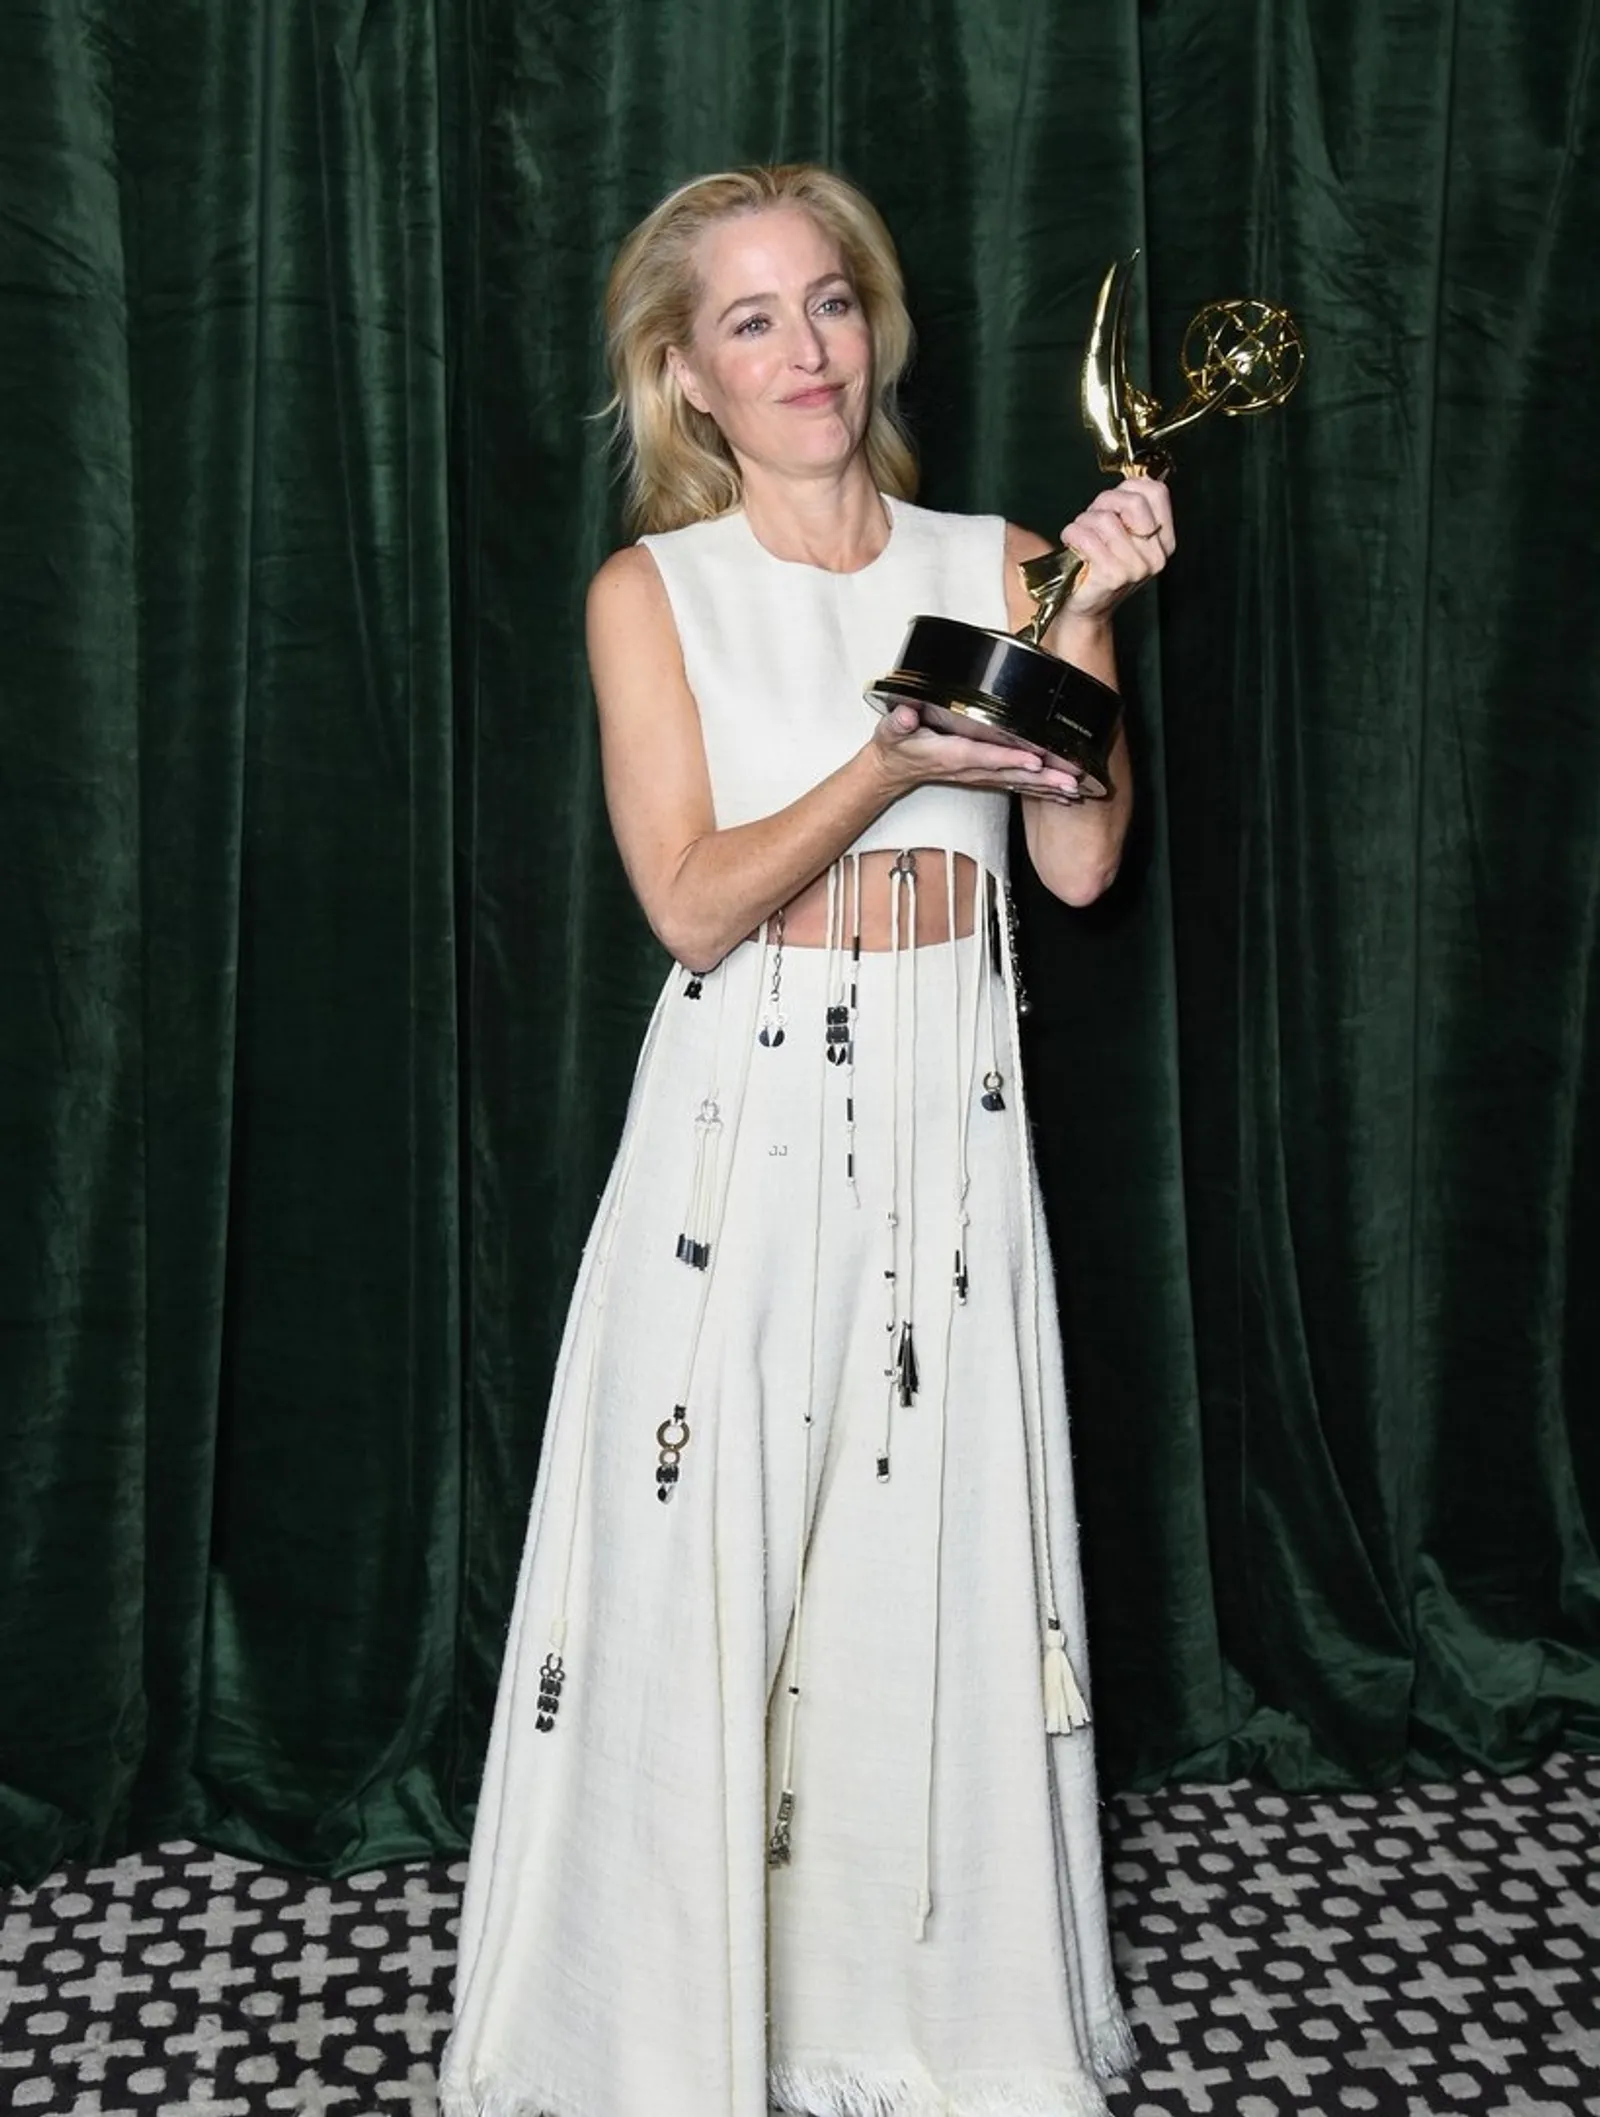 Gaya Terbaik Para Seleb di Karpet Merah Emmy Awards 2021